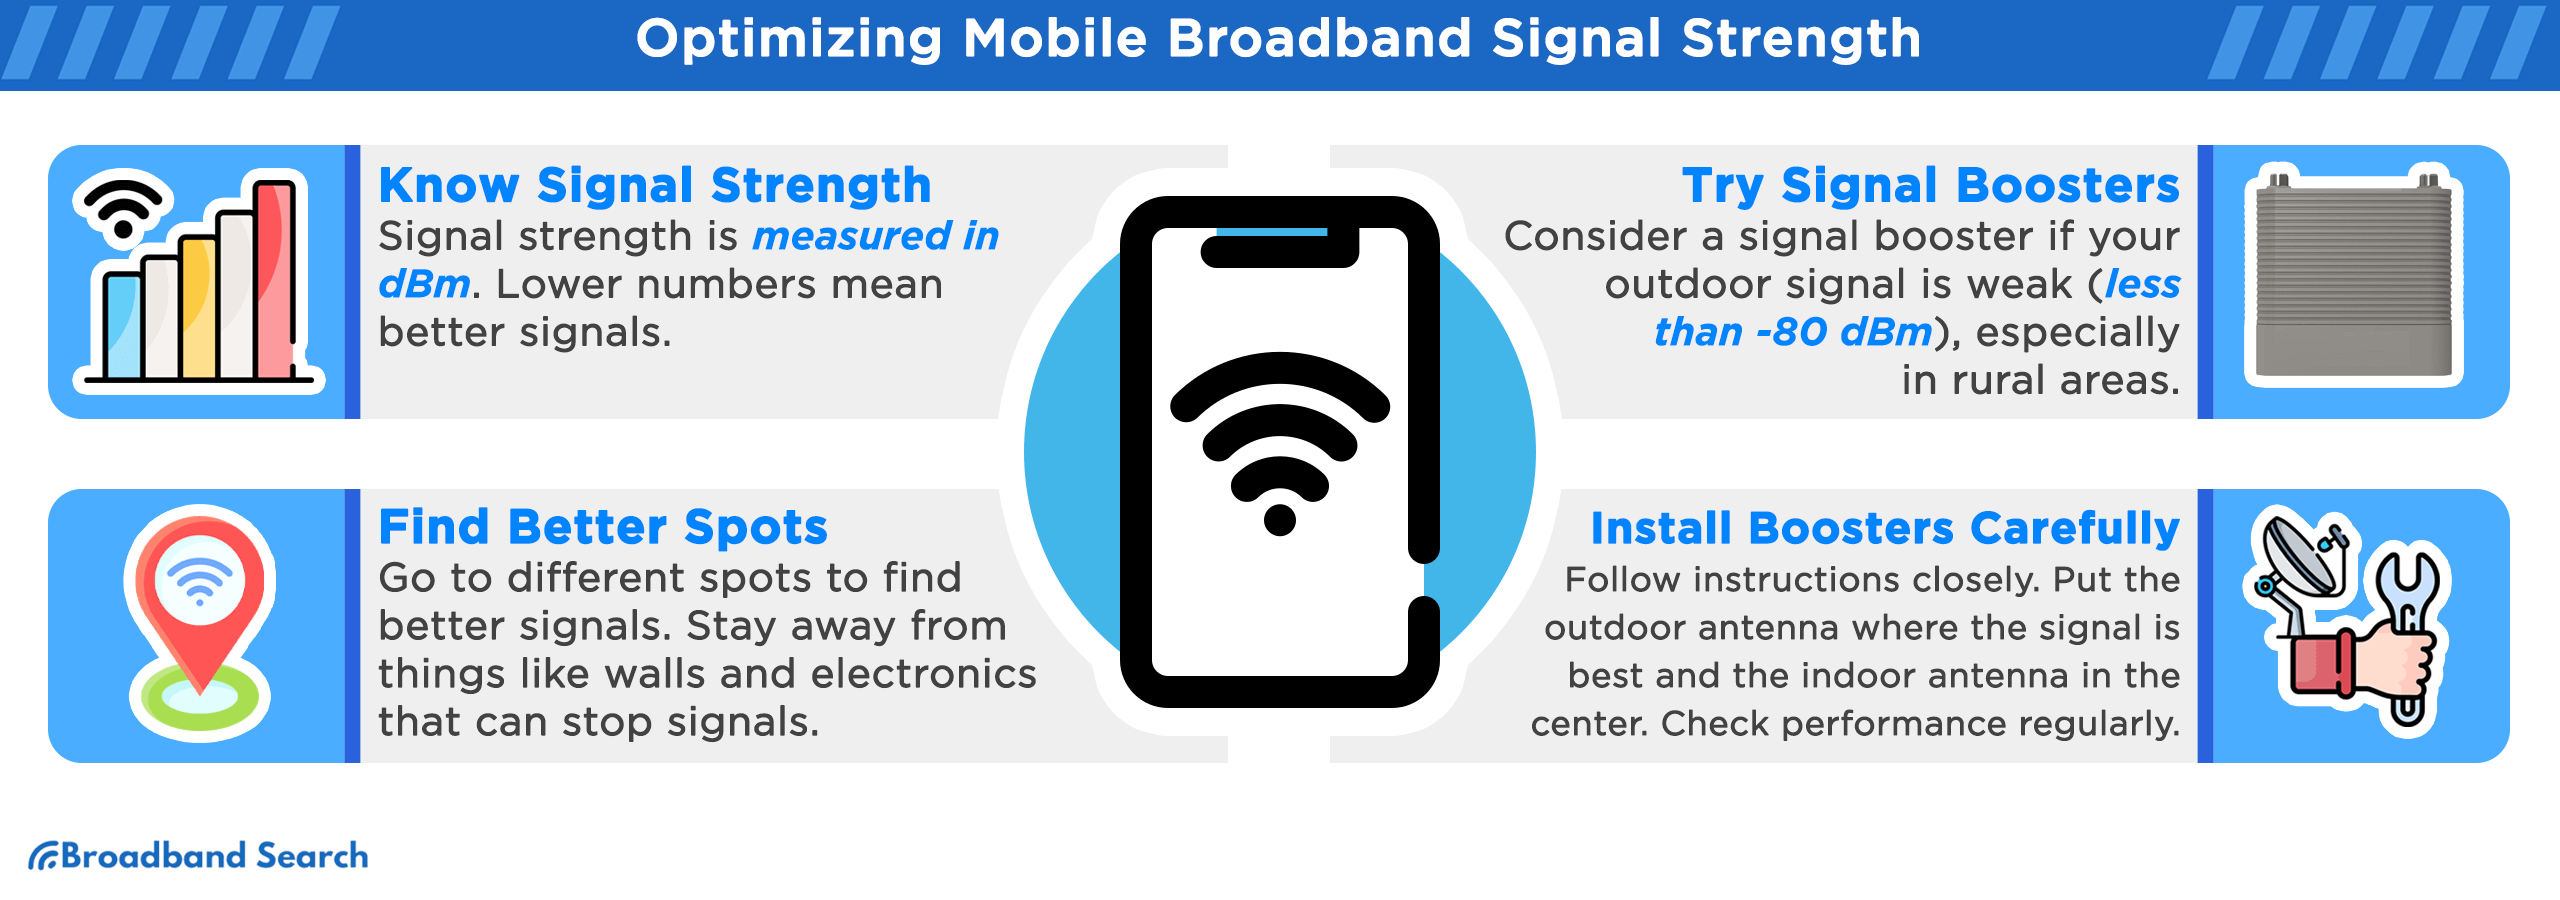 Optimizing Mobile broadband signal strength